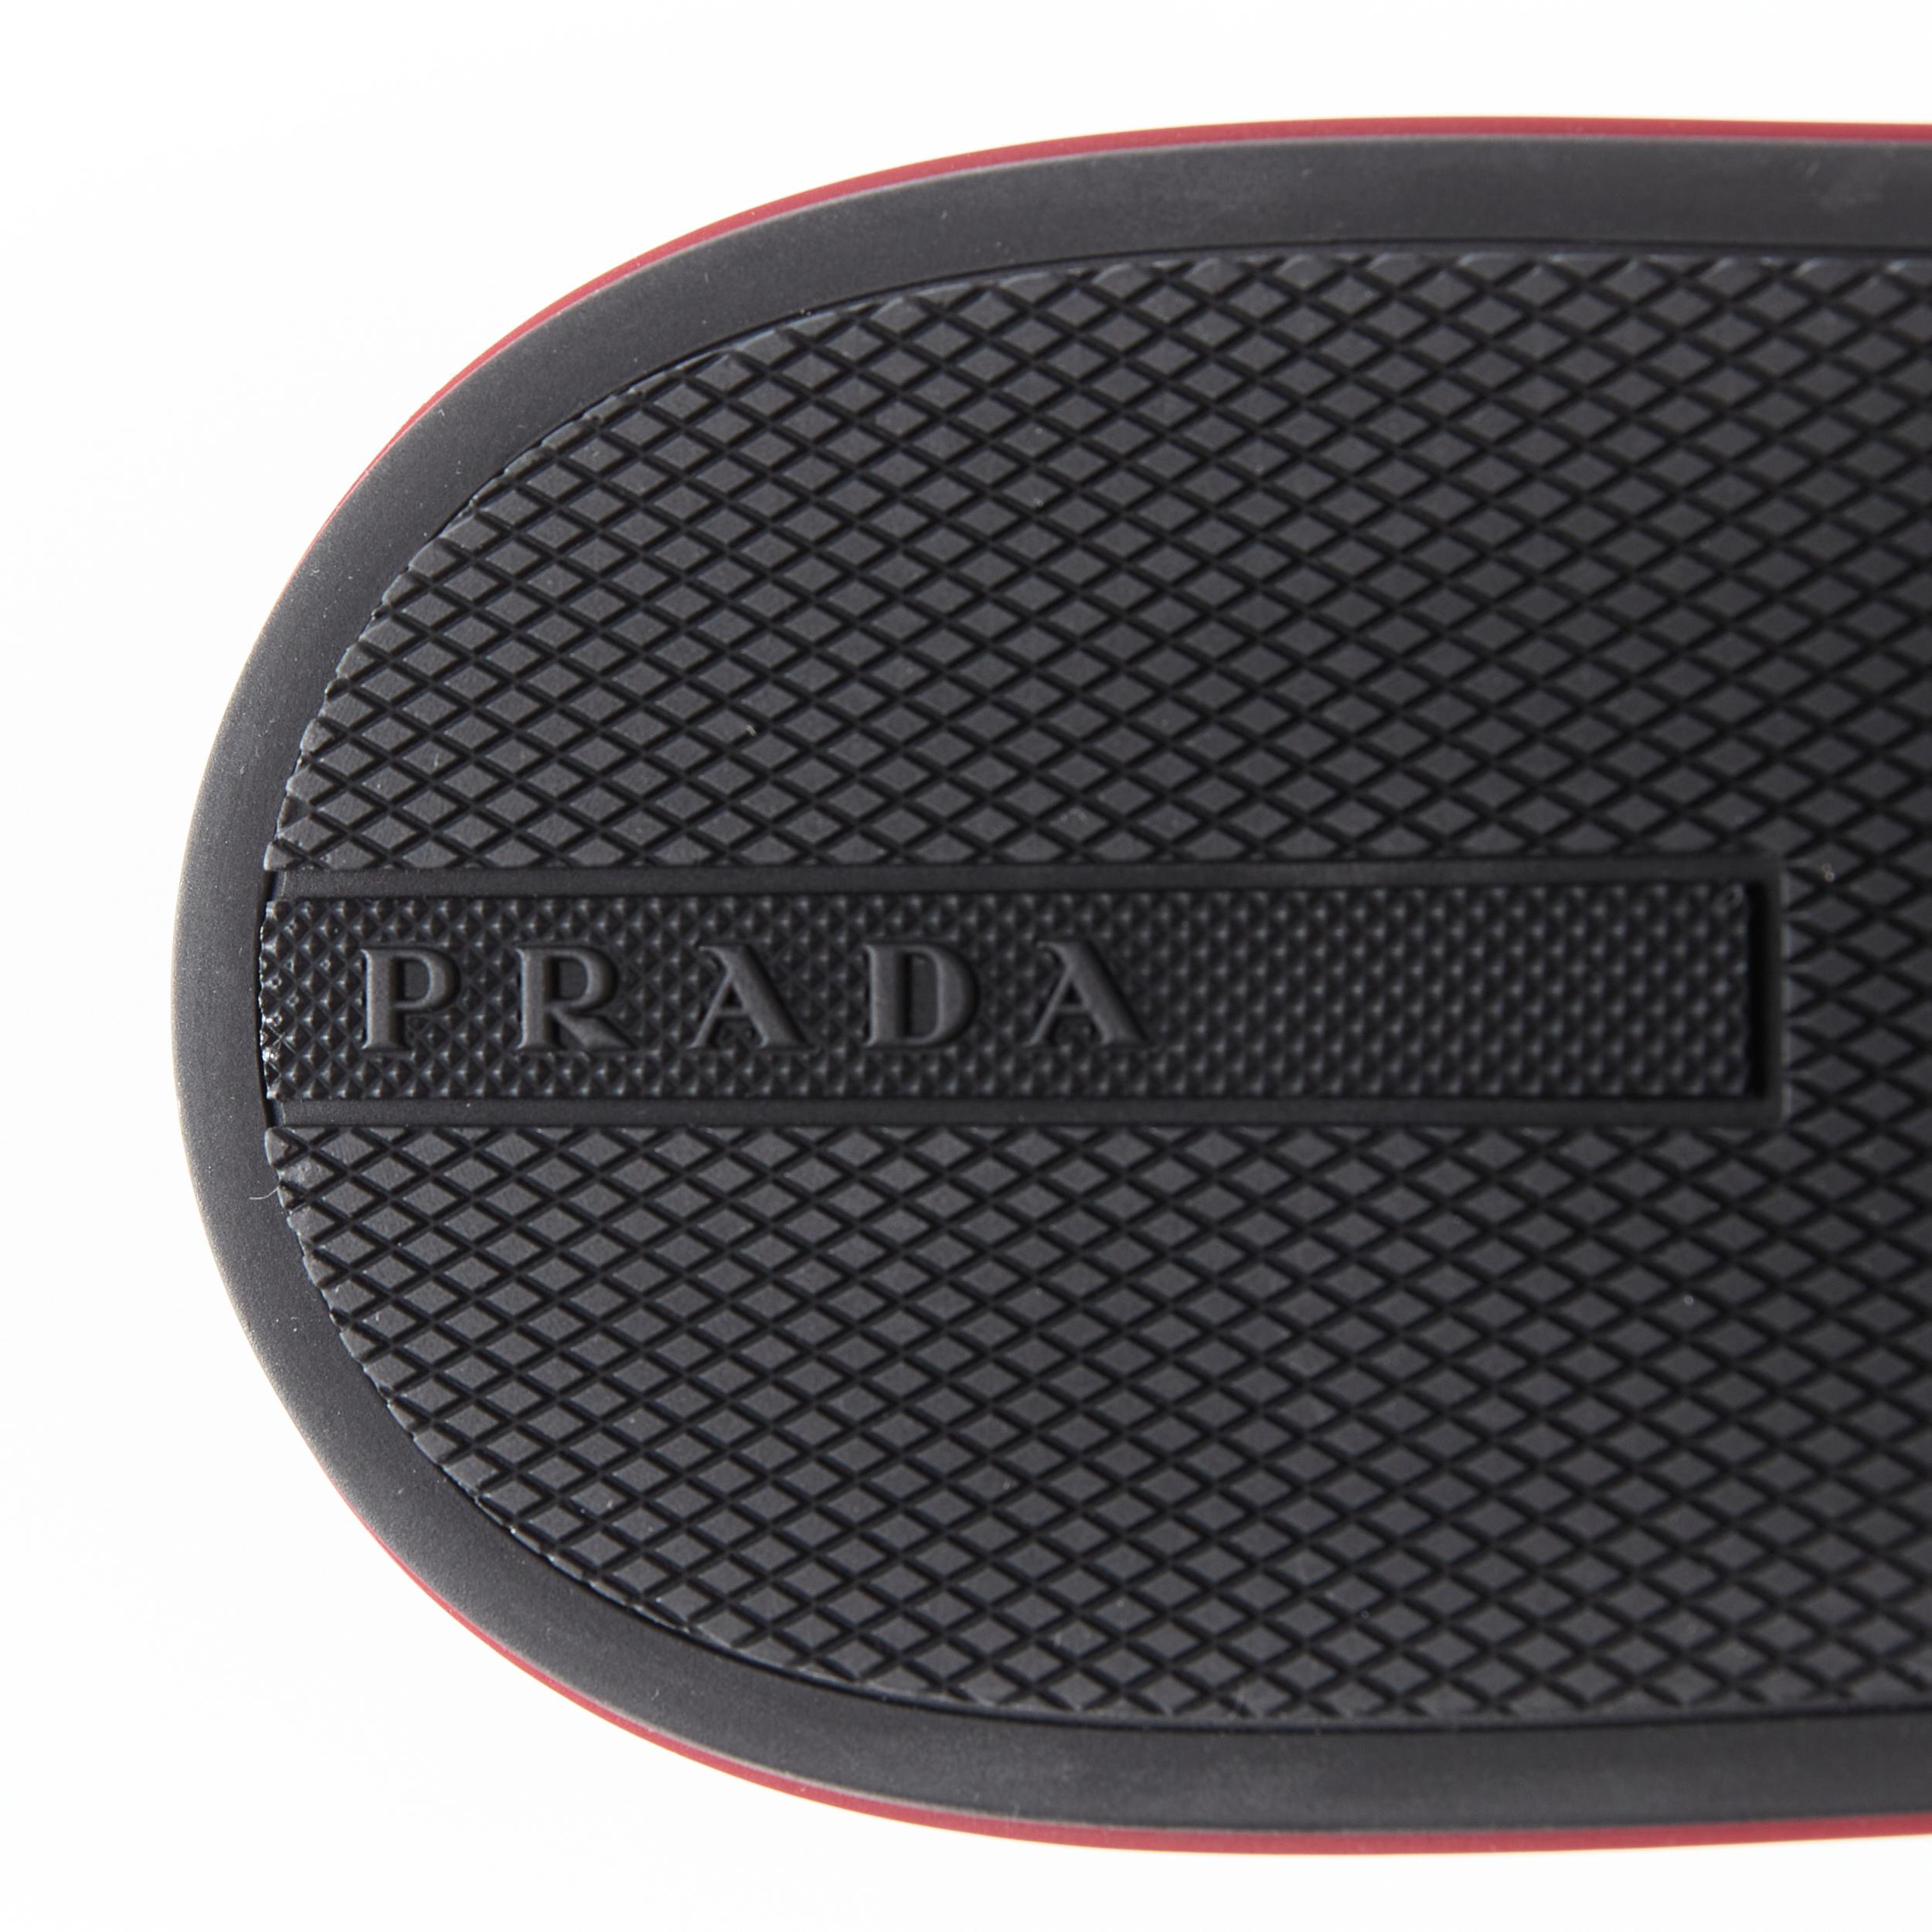 new PRADA white leather triangle logo red white midsole low sneaker UK9 US10 2